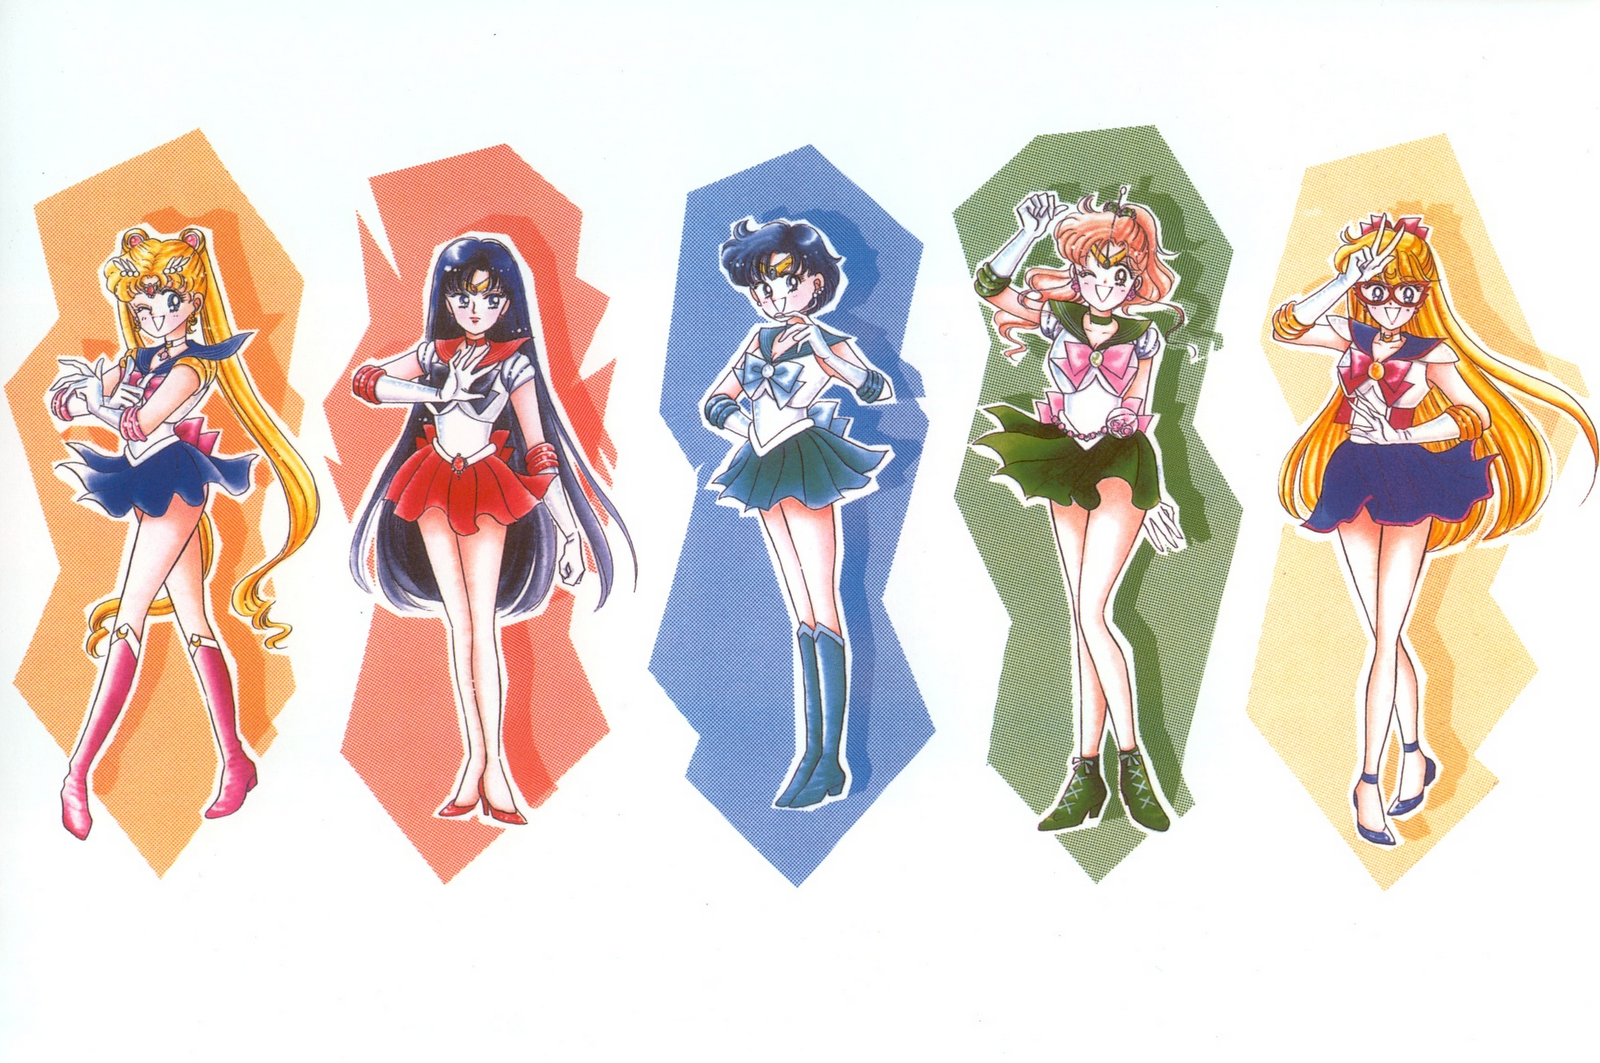  Sailor Moon Wallpaper Desktop on